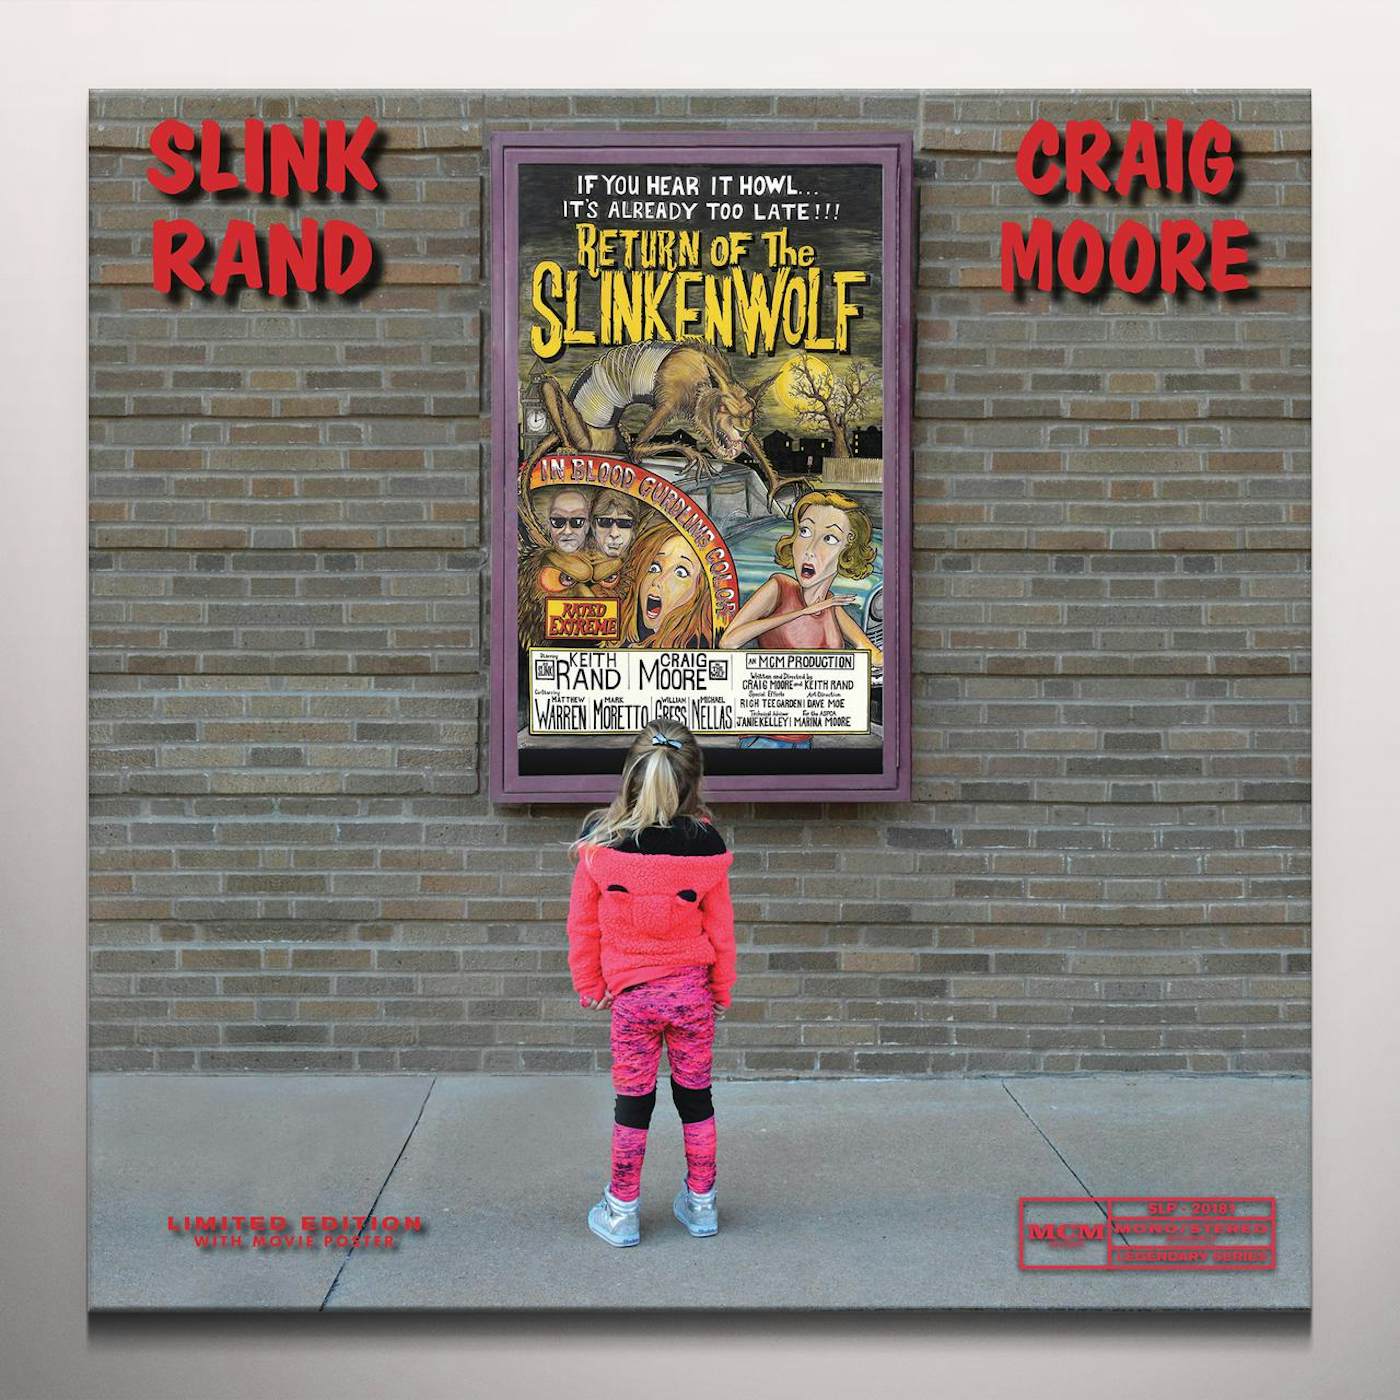 Slink Rand & Craig Moore RETURN OF THE SLINKENWOLF (BLOODY COLORED VINYL/POSTER/LIMITED/NUMBERED) Vinyl Record